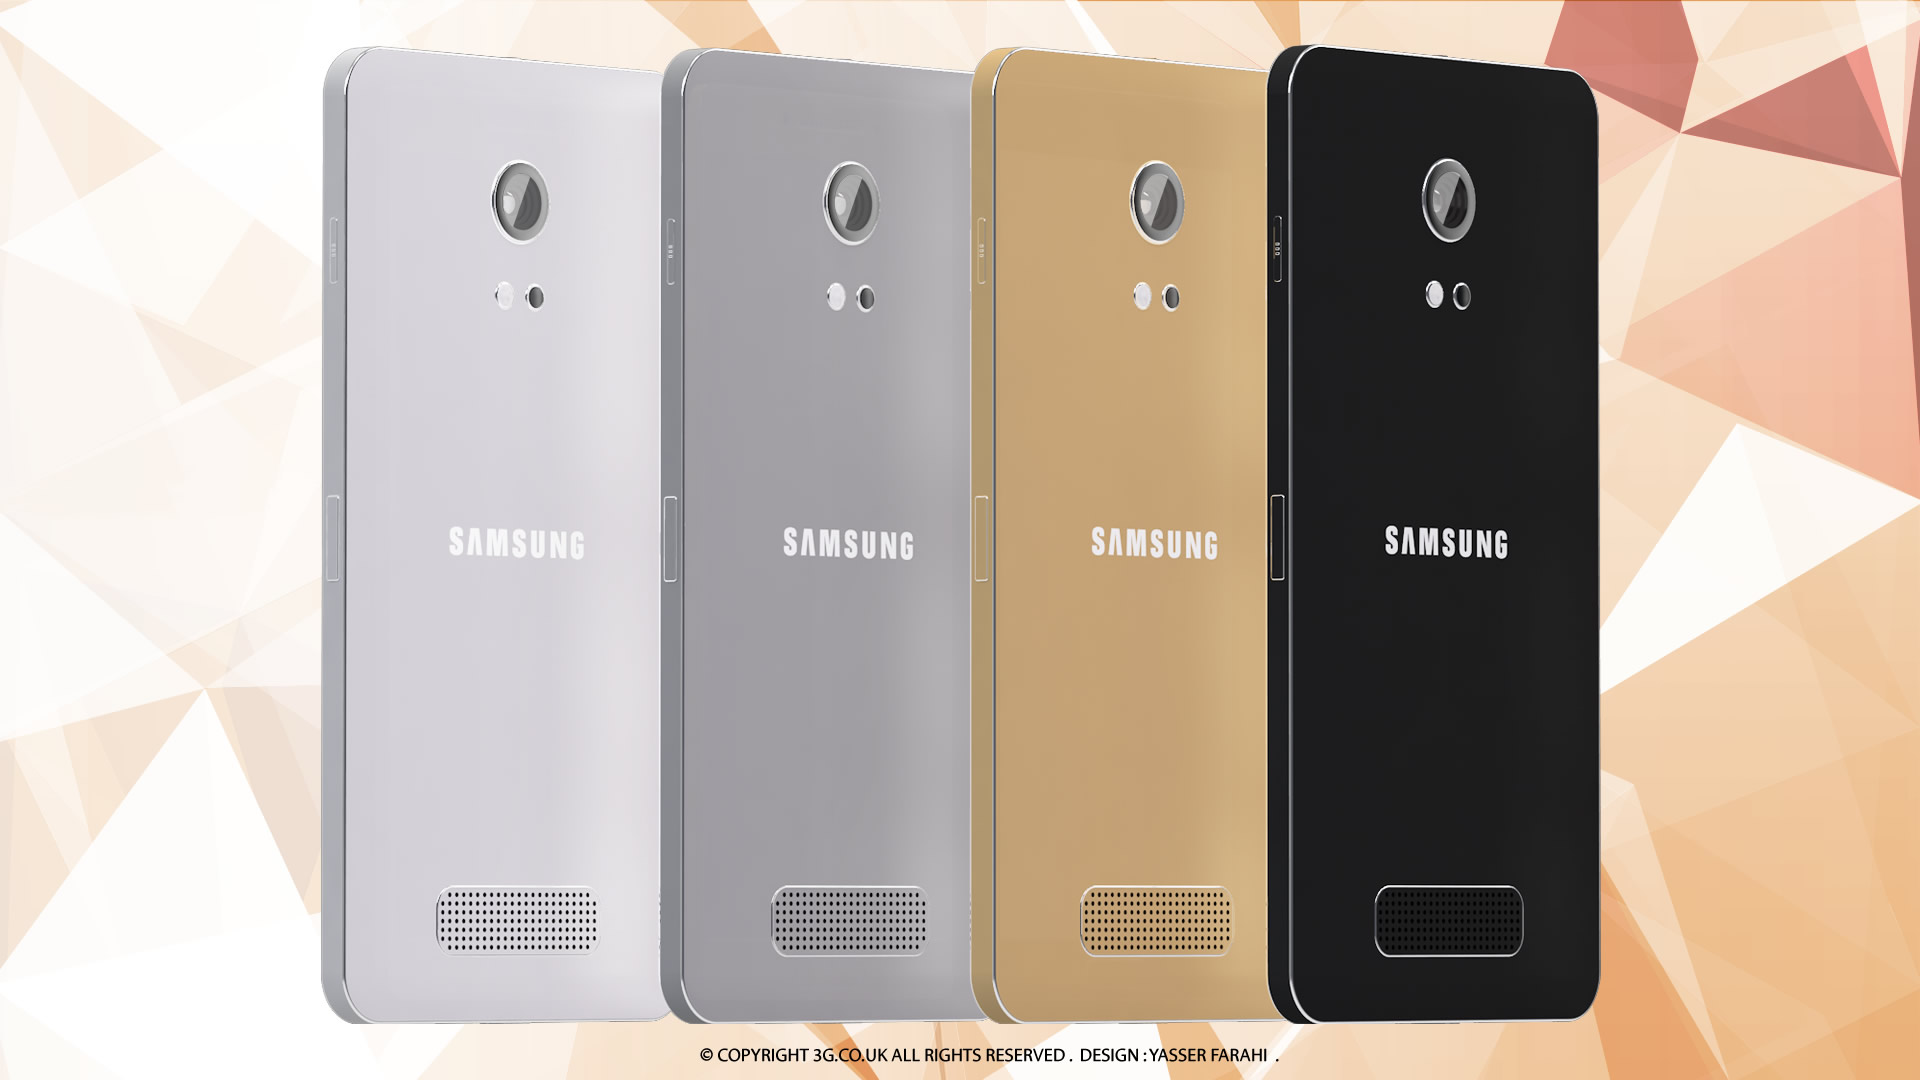 Samsung Galaxy S6 Photo2 HQ